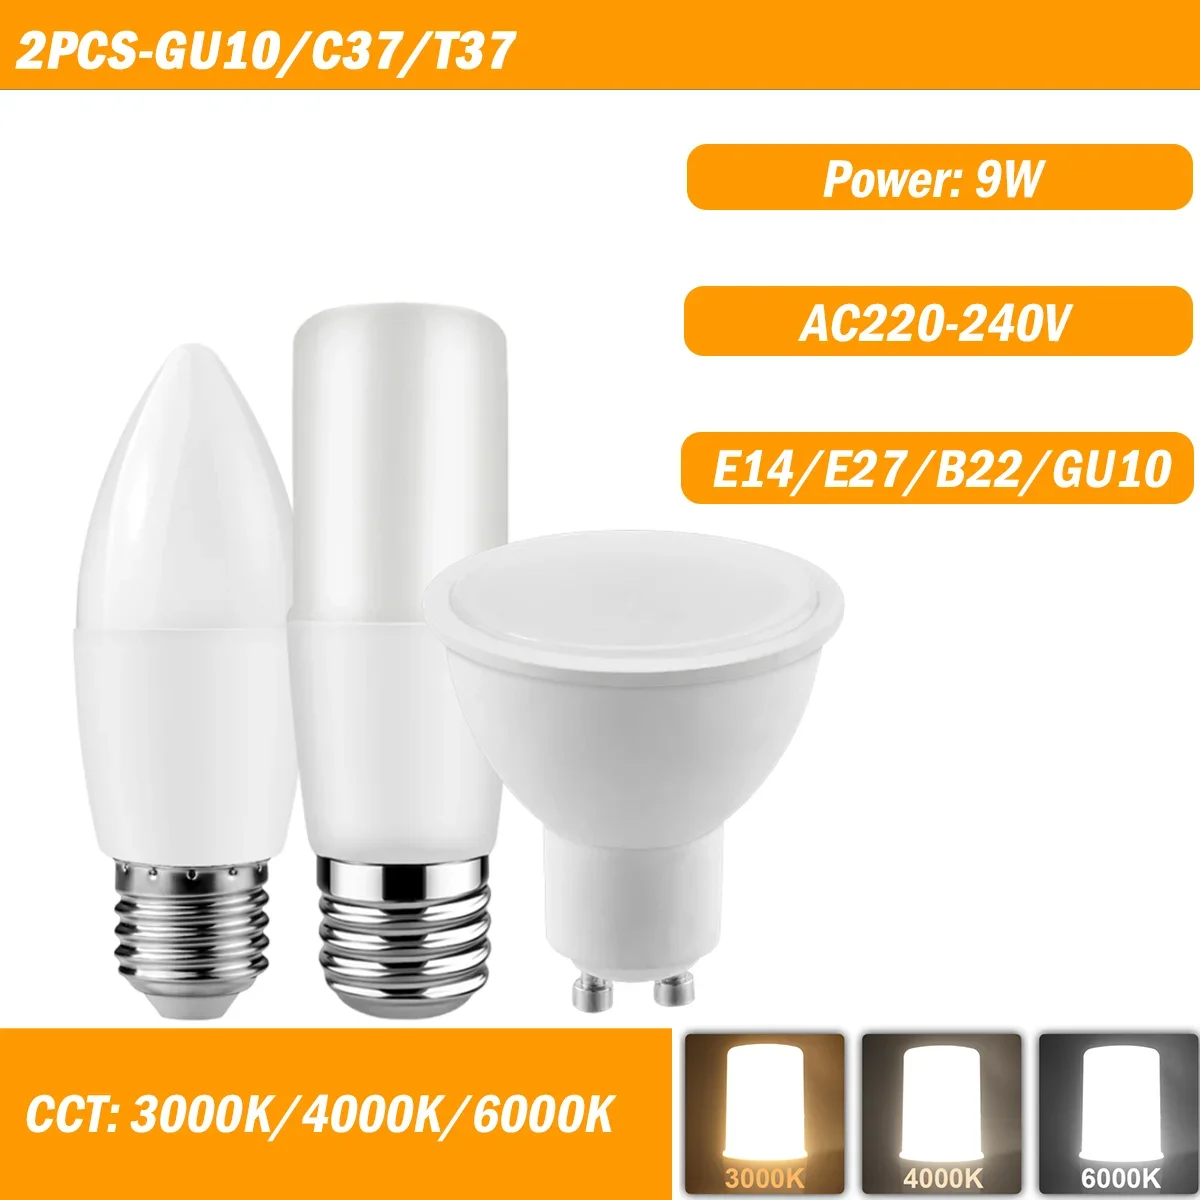 

Led 2PCS C37/T37/GU10 Light 9W AC220-240V E14/E27/B22/GU10 High Lumen CRI80 No Flicker Warm White Light for Office/Home/Kitchen